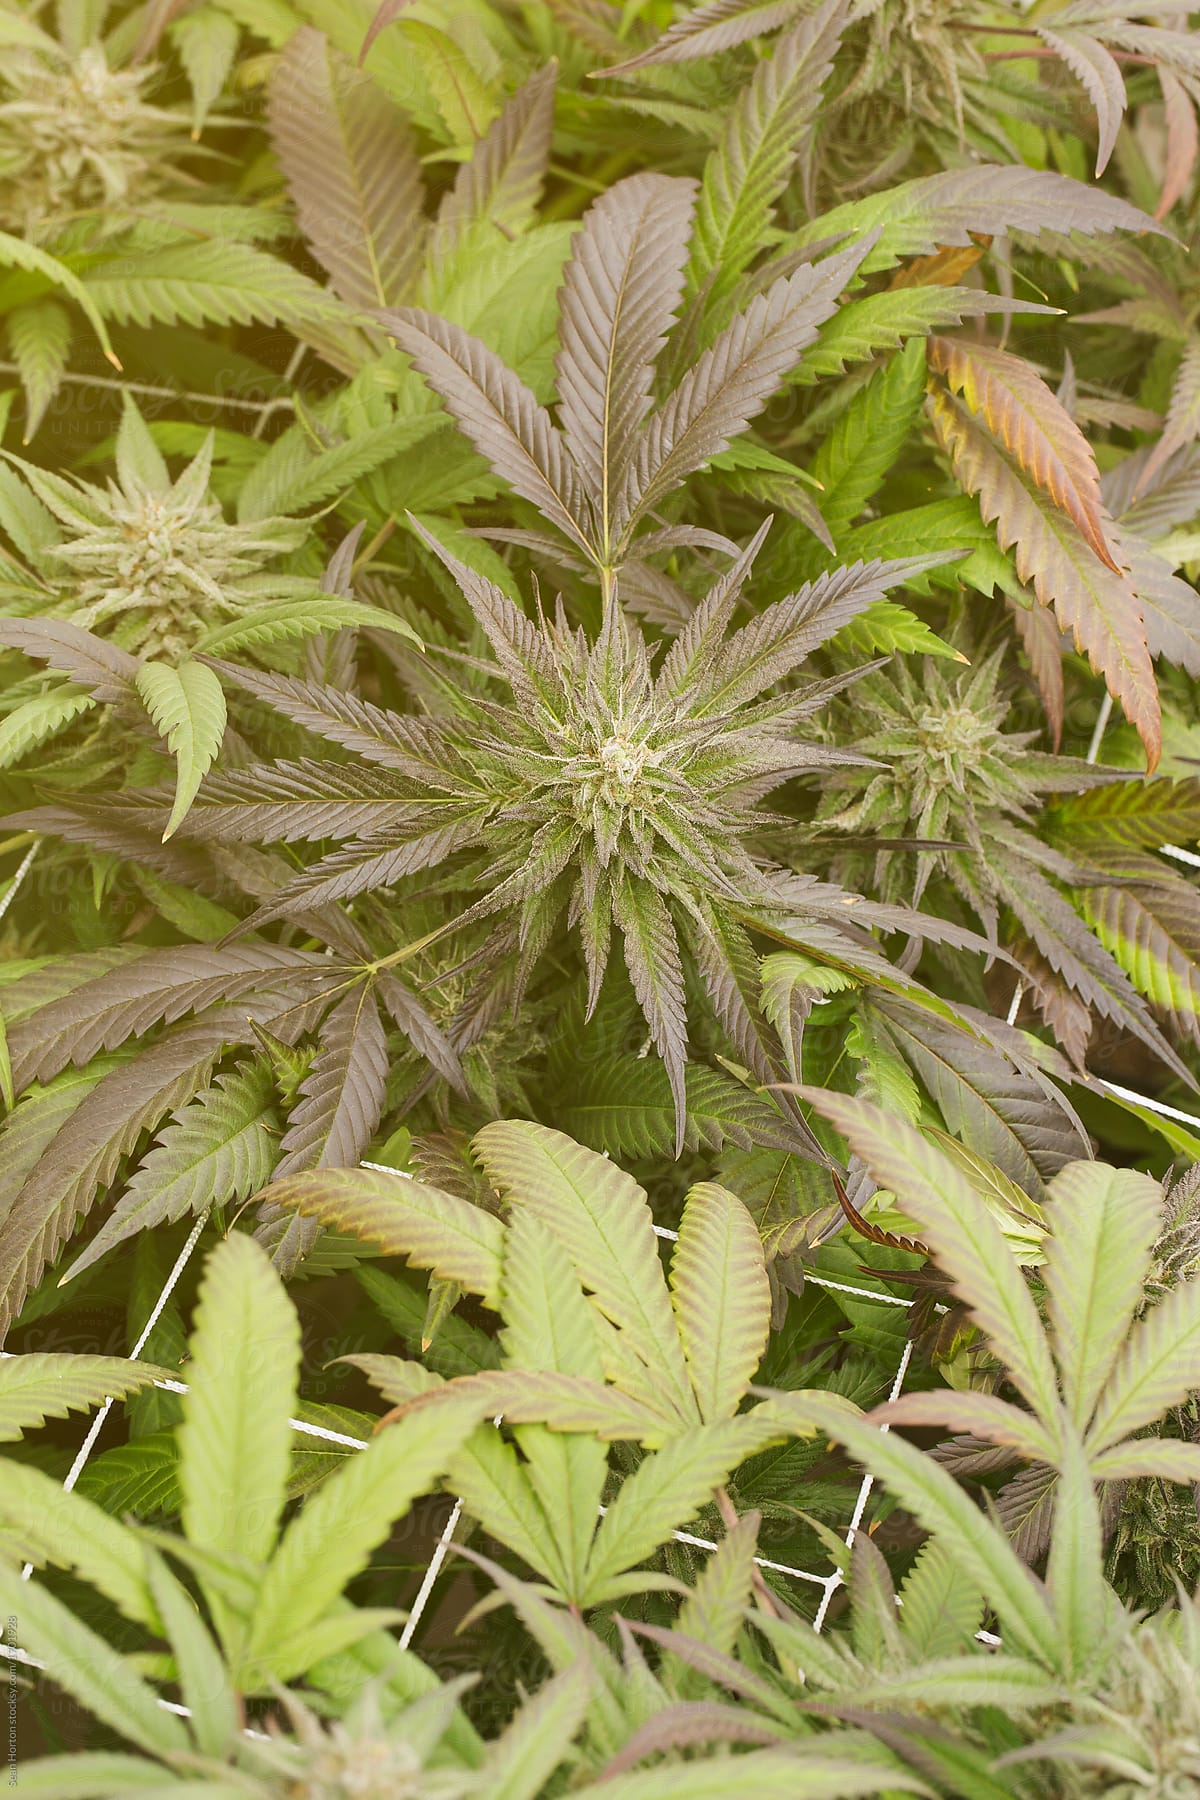 45 Degree Top Down Medium Shot of Marijuana Plant